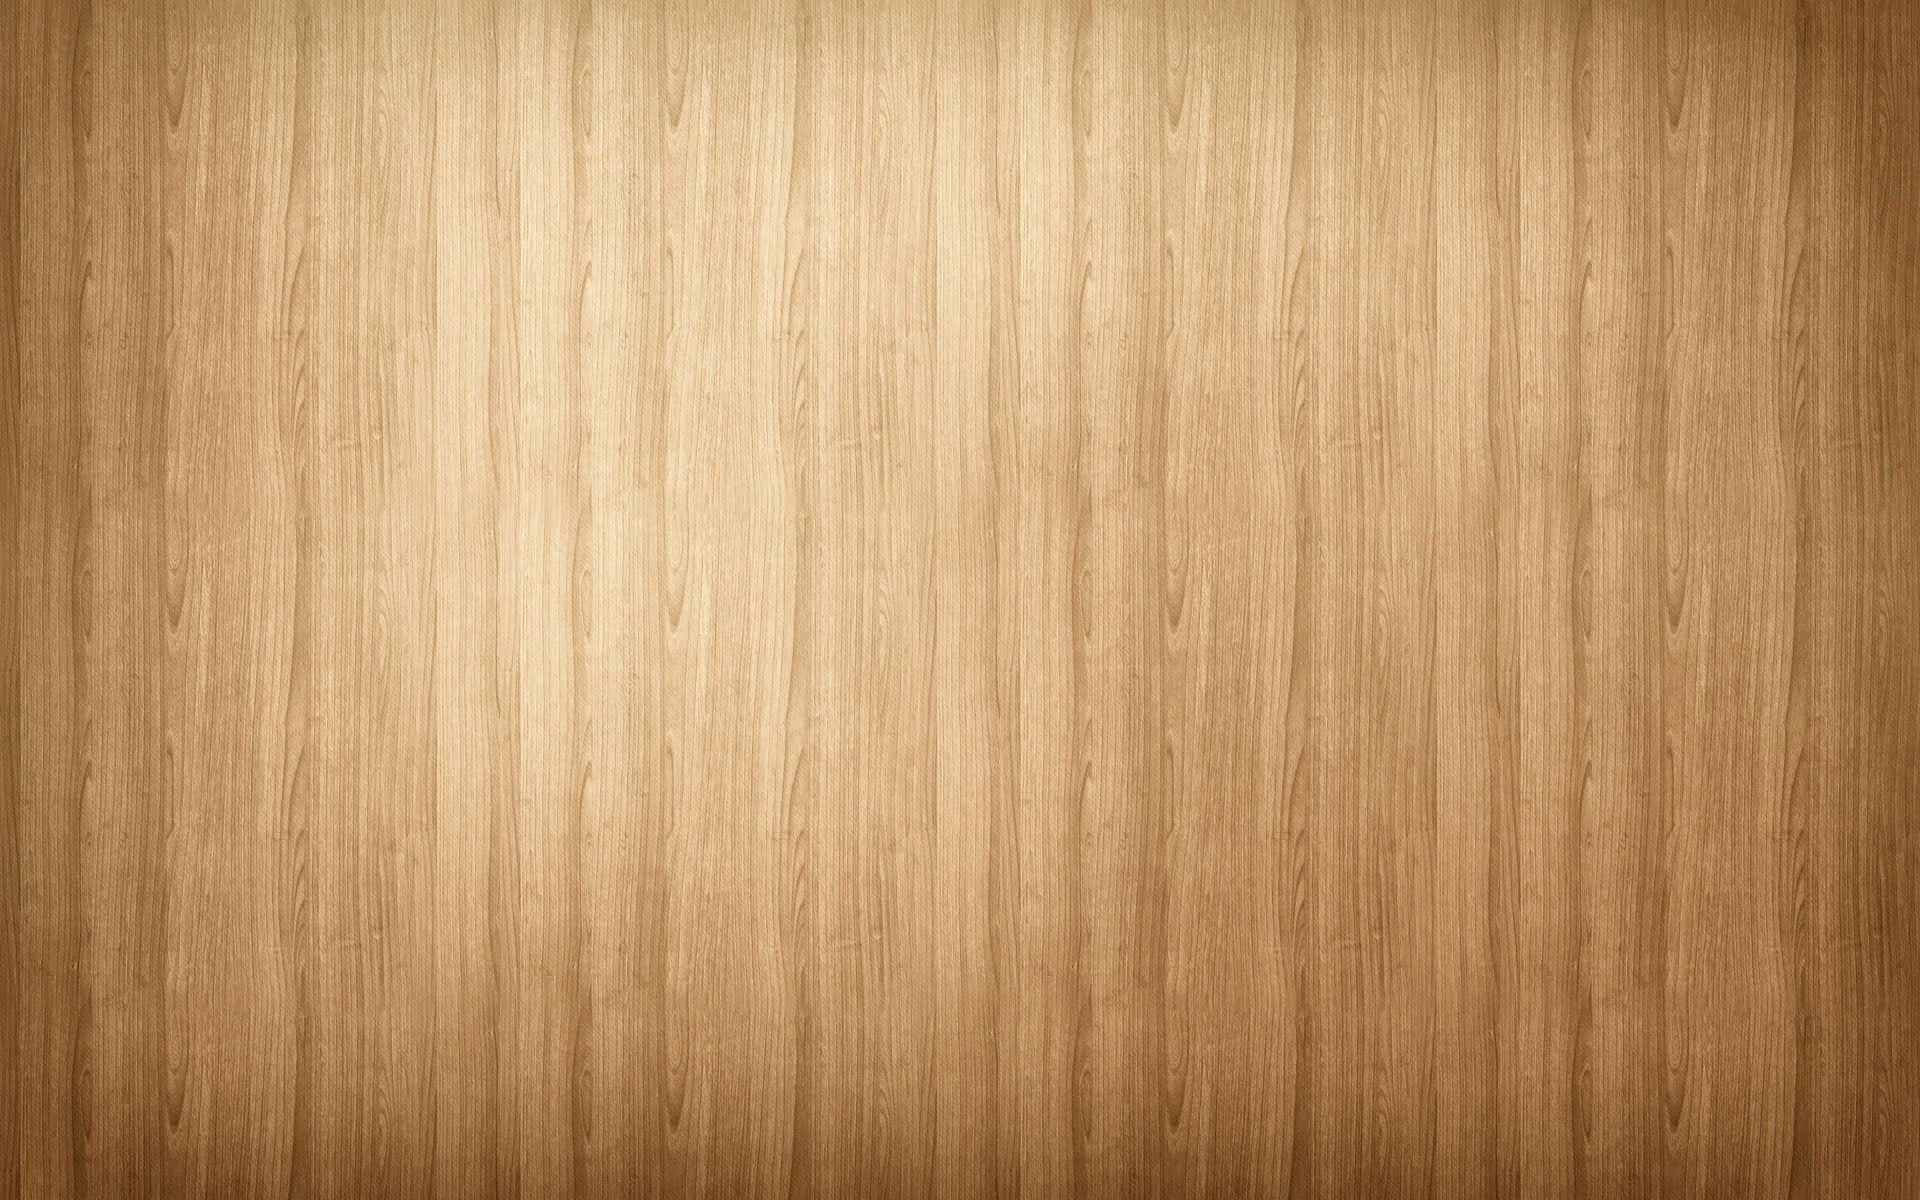 Caption: Endless Wooden Patterns Wallpaper